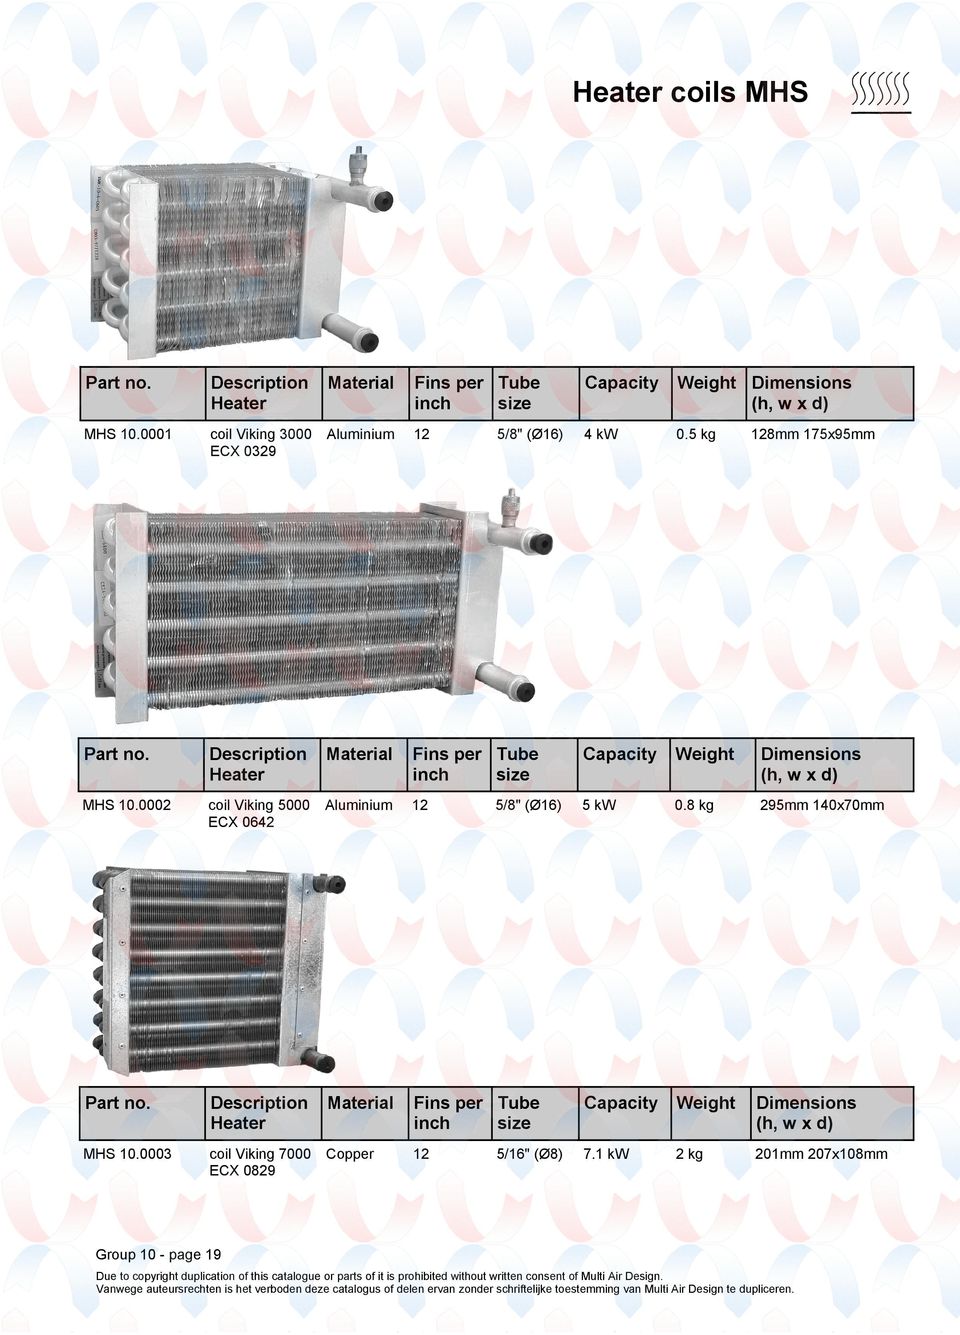 Description Heater Material Fins per Tube inch size Capacity Weight Dimensions (h, w x d) MHS 10.0002 coil Viking 5000 ECX 0642 Aluminium 12 5 kw 0.